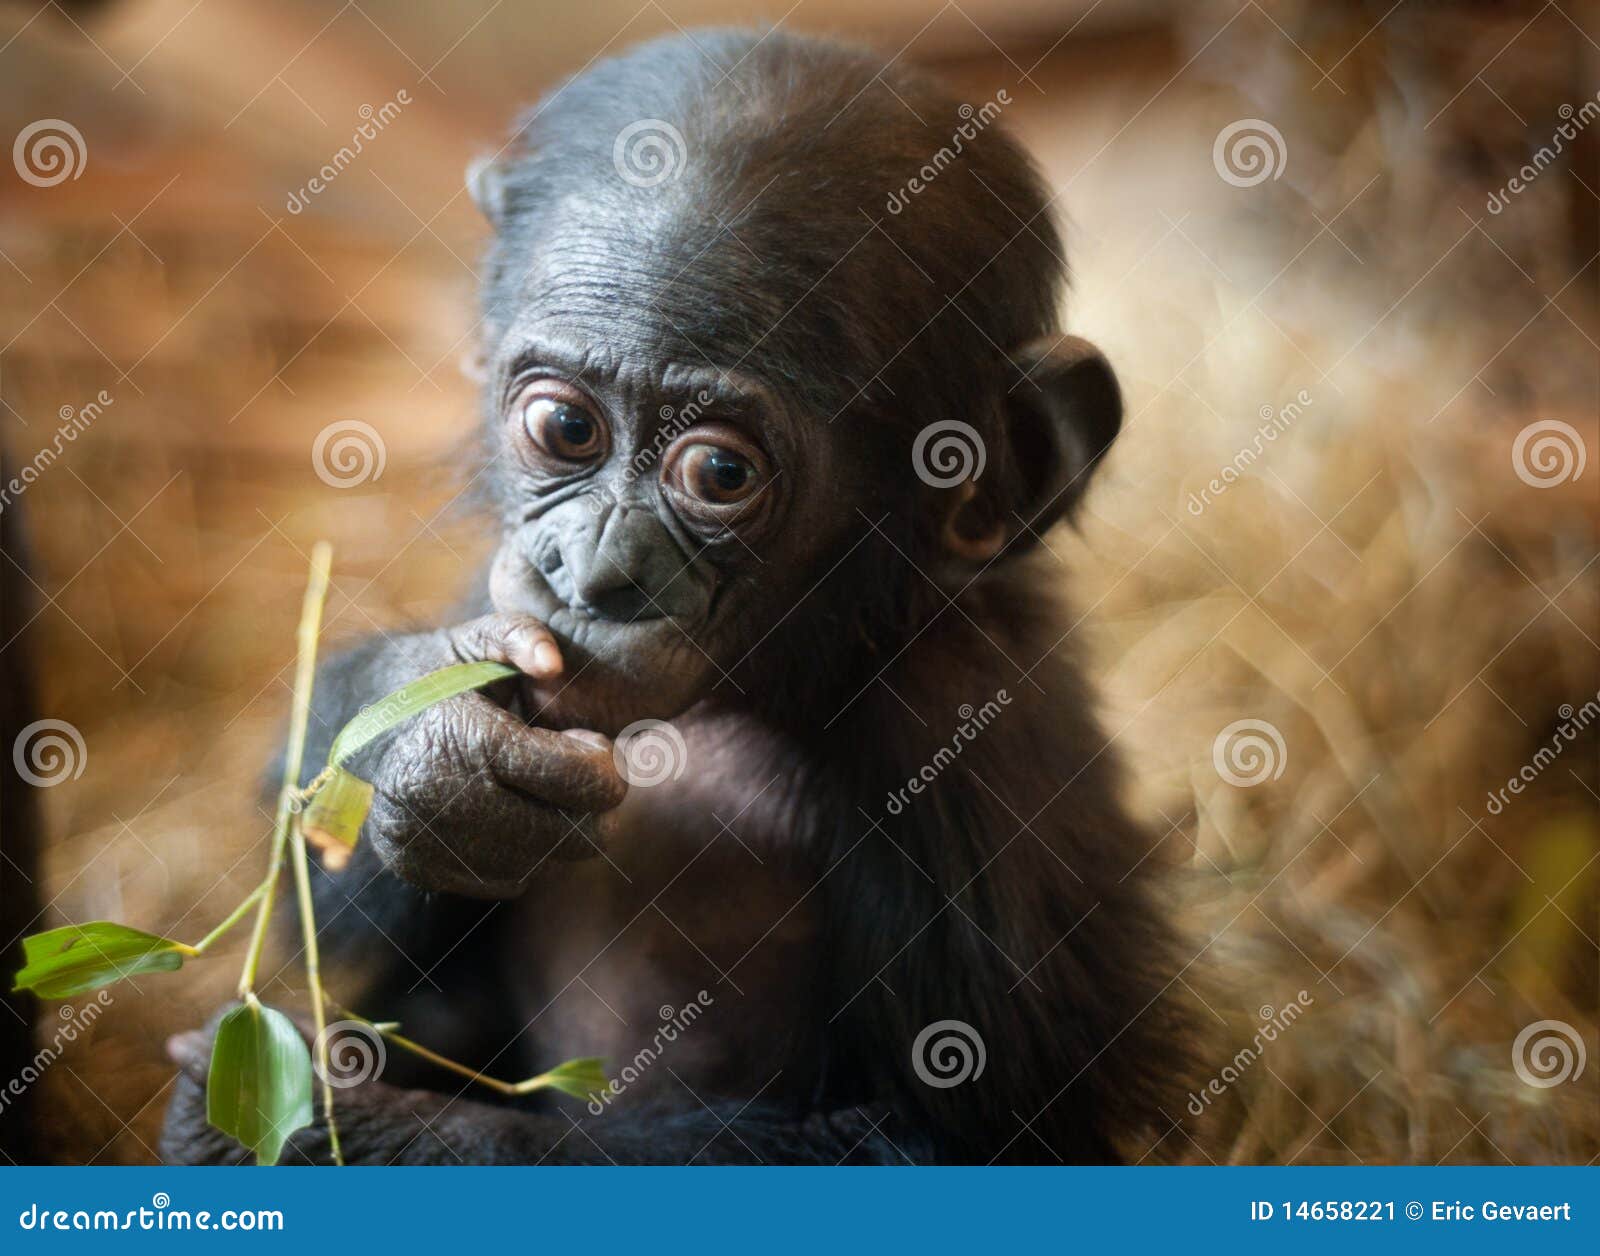 cute baby bonobo monkey